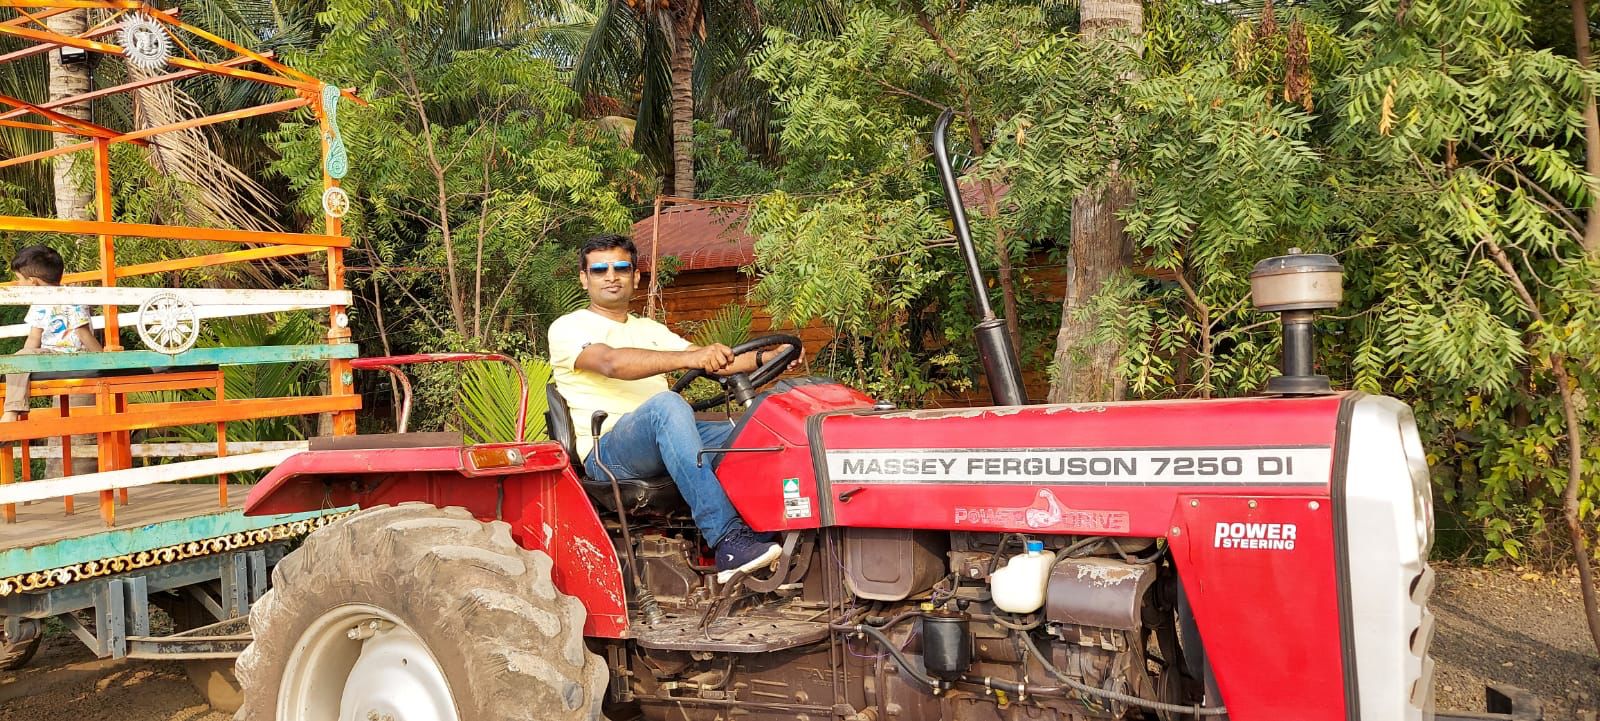 tractor ride